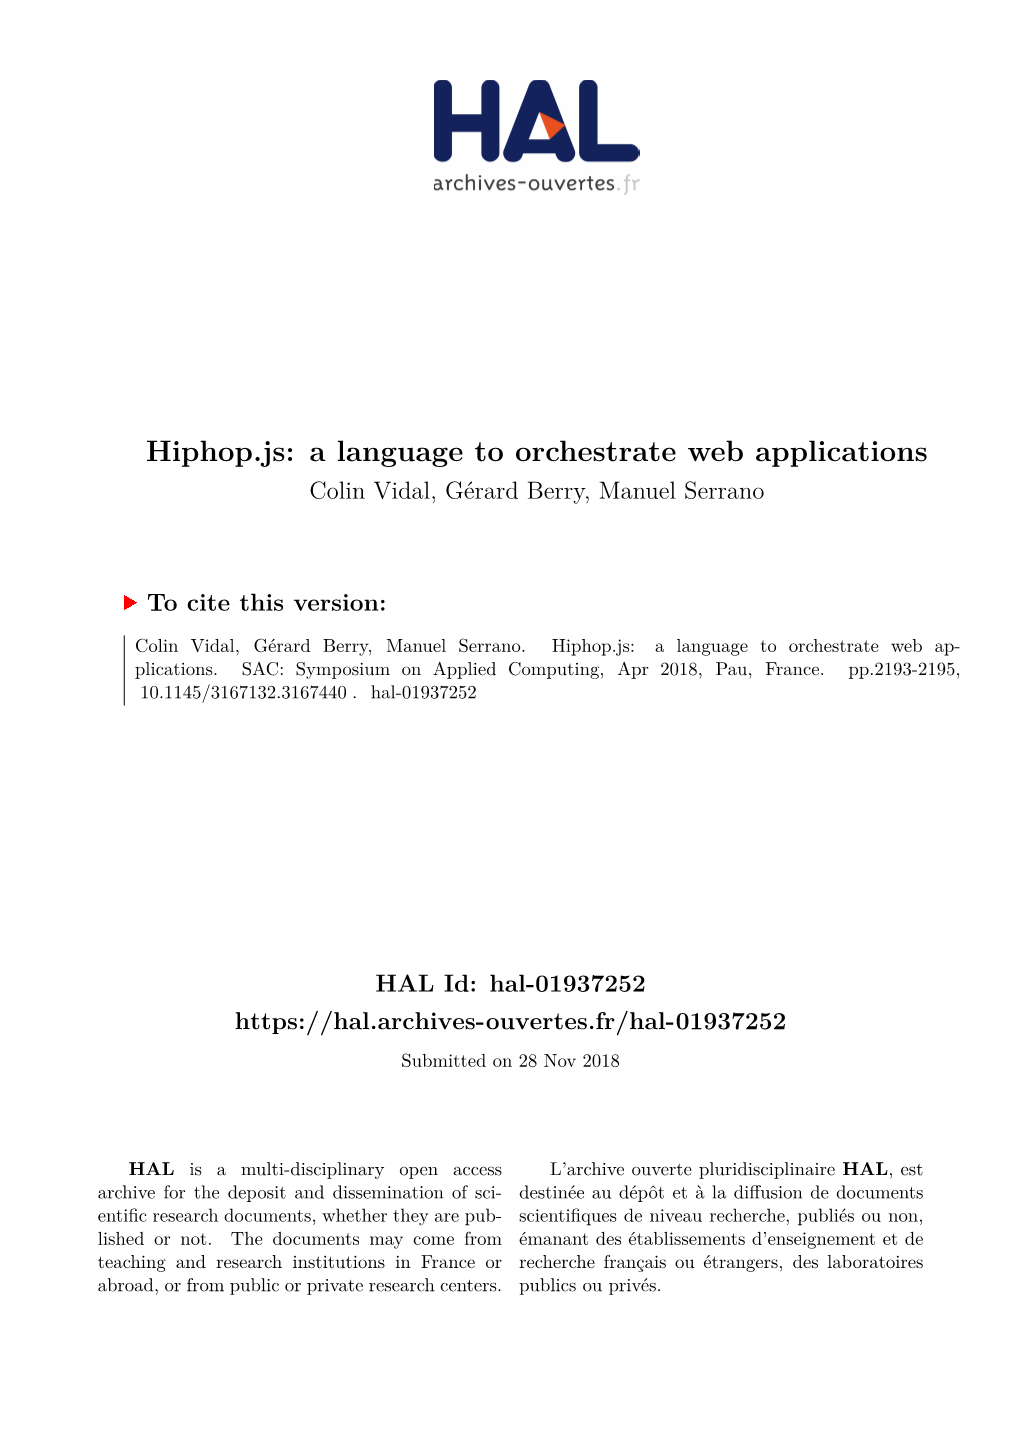 Hiphop.Js: a Language to Orchestrate Web Applications Colin Vidal, Gérard Berry, Manuel Serrano